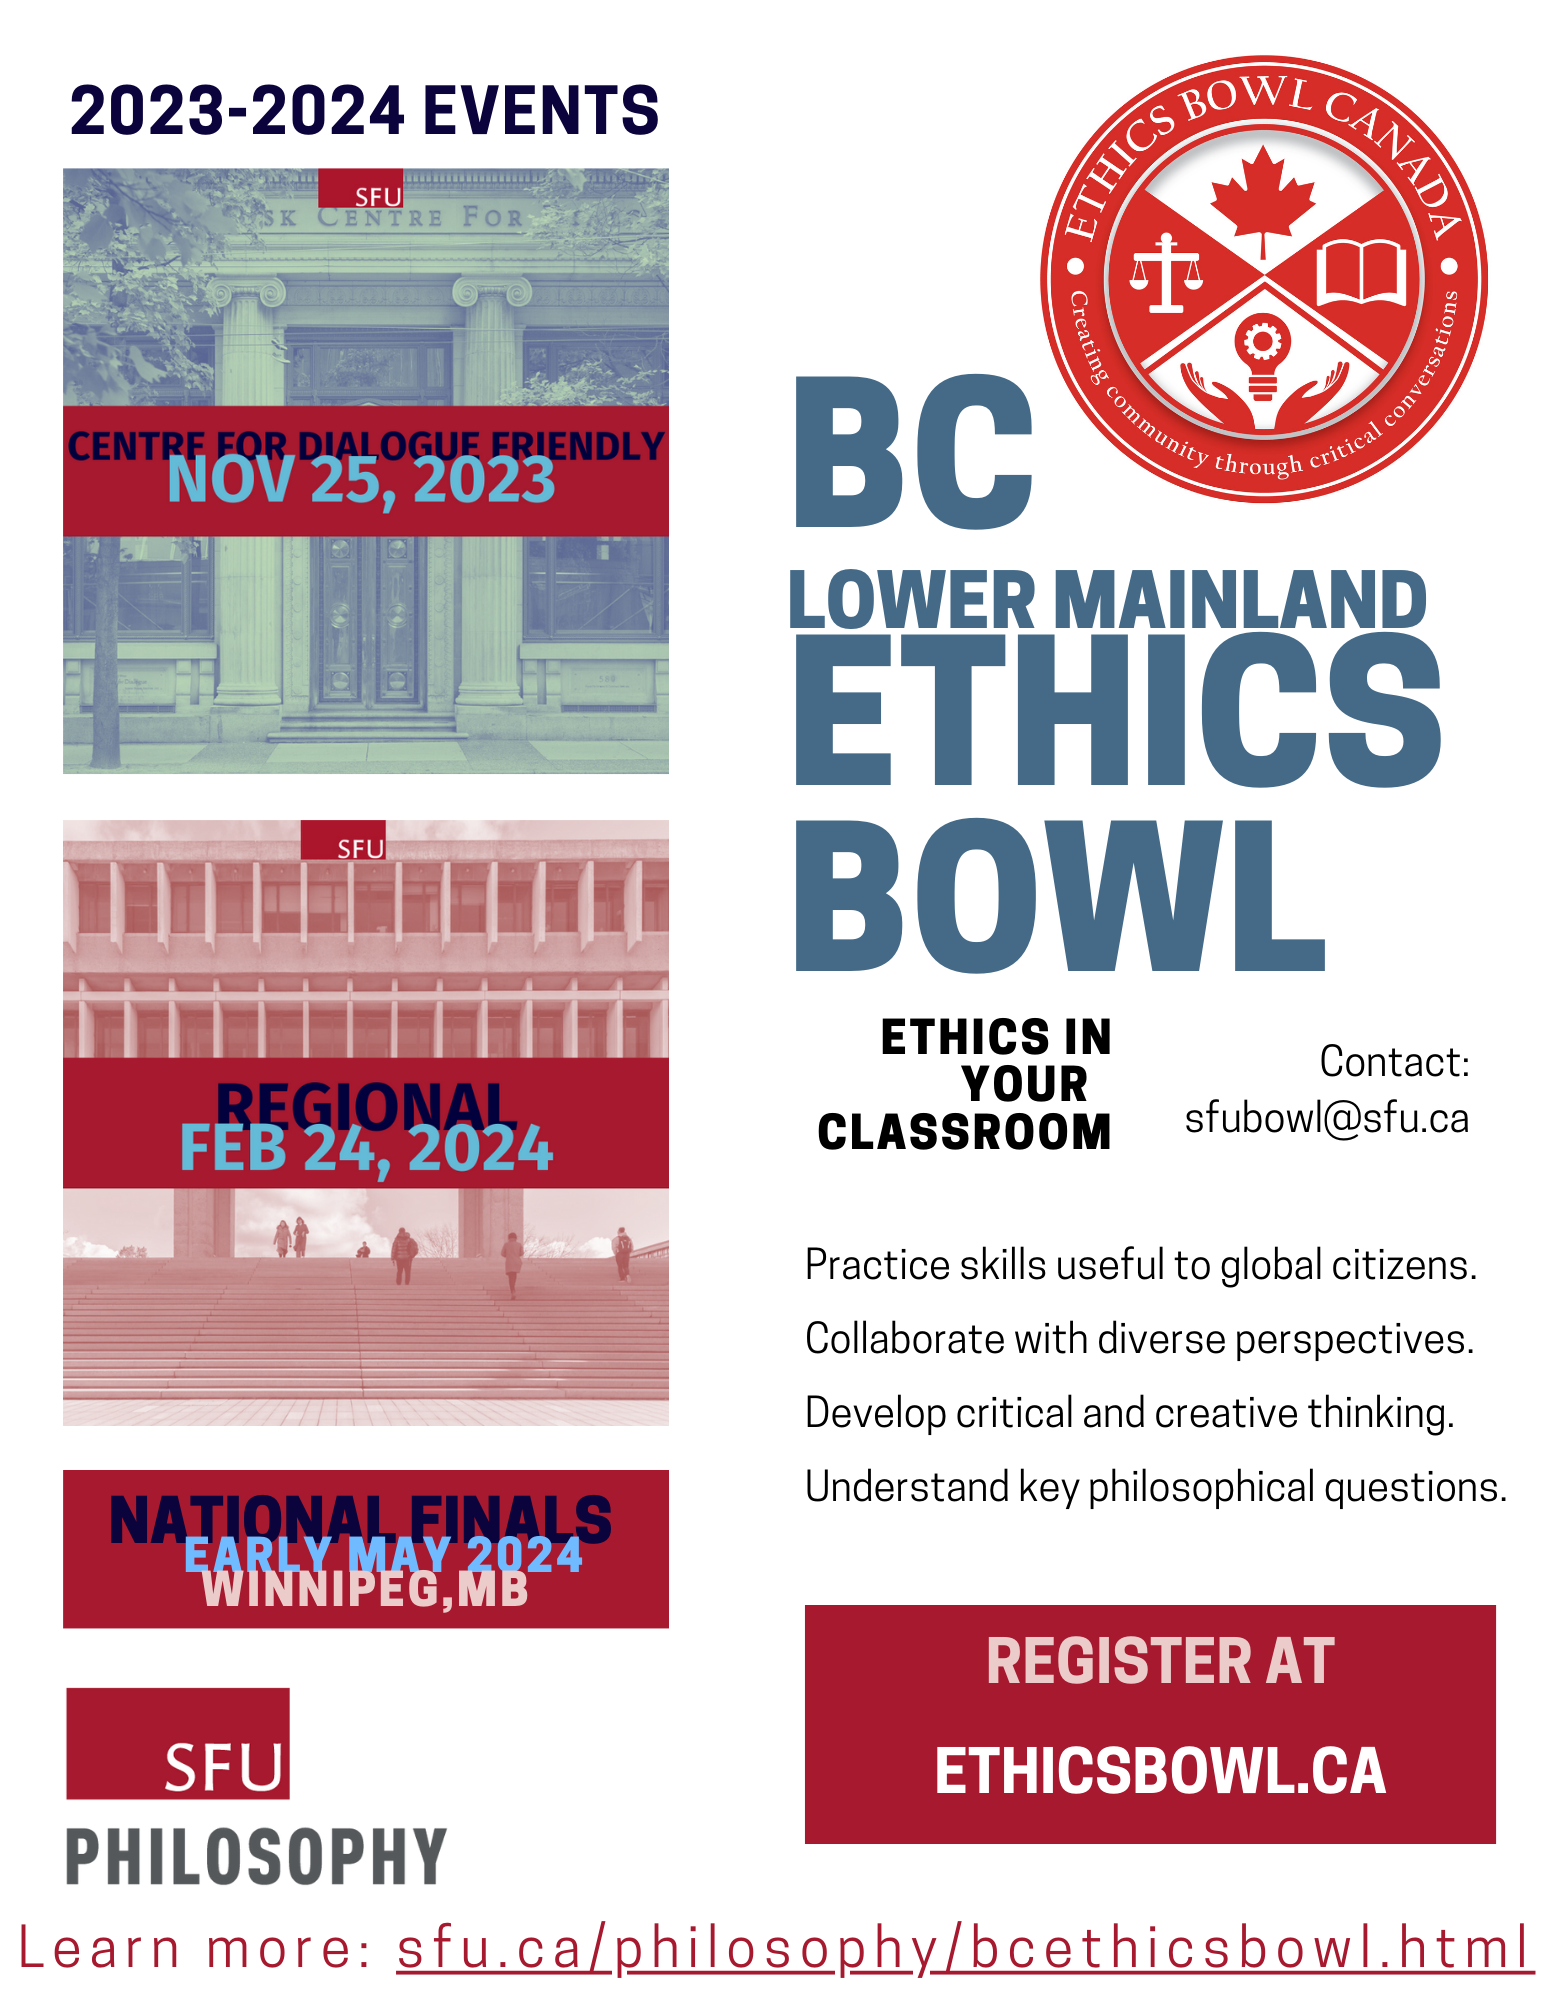 Ethics Bowl Flyer 2021 - 1